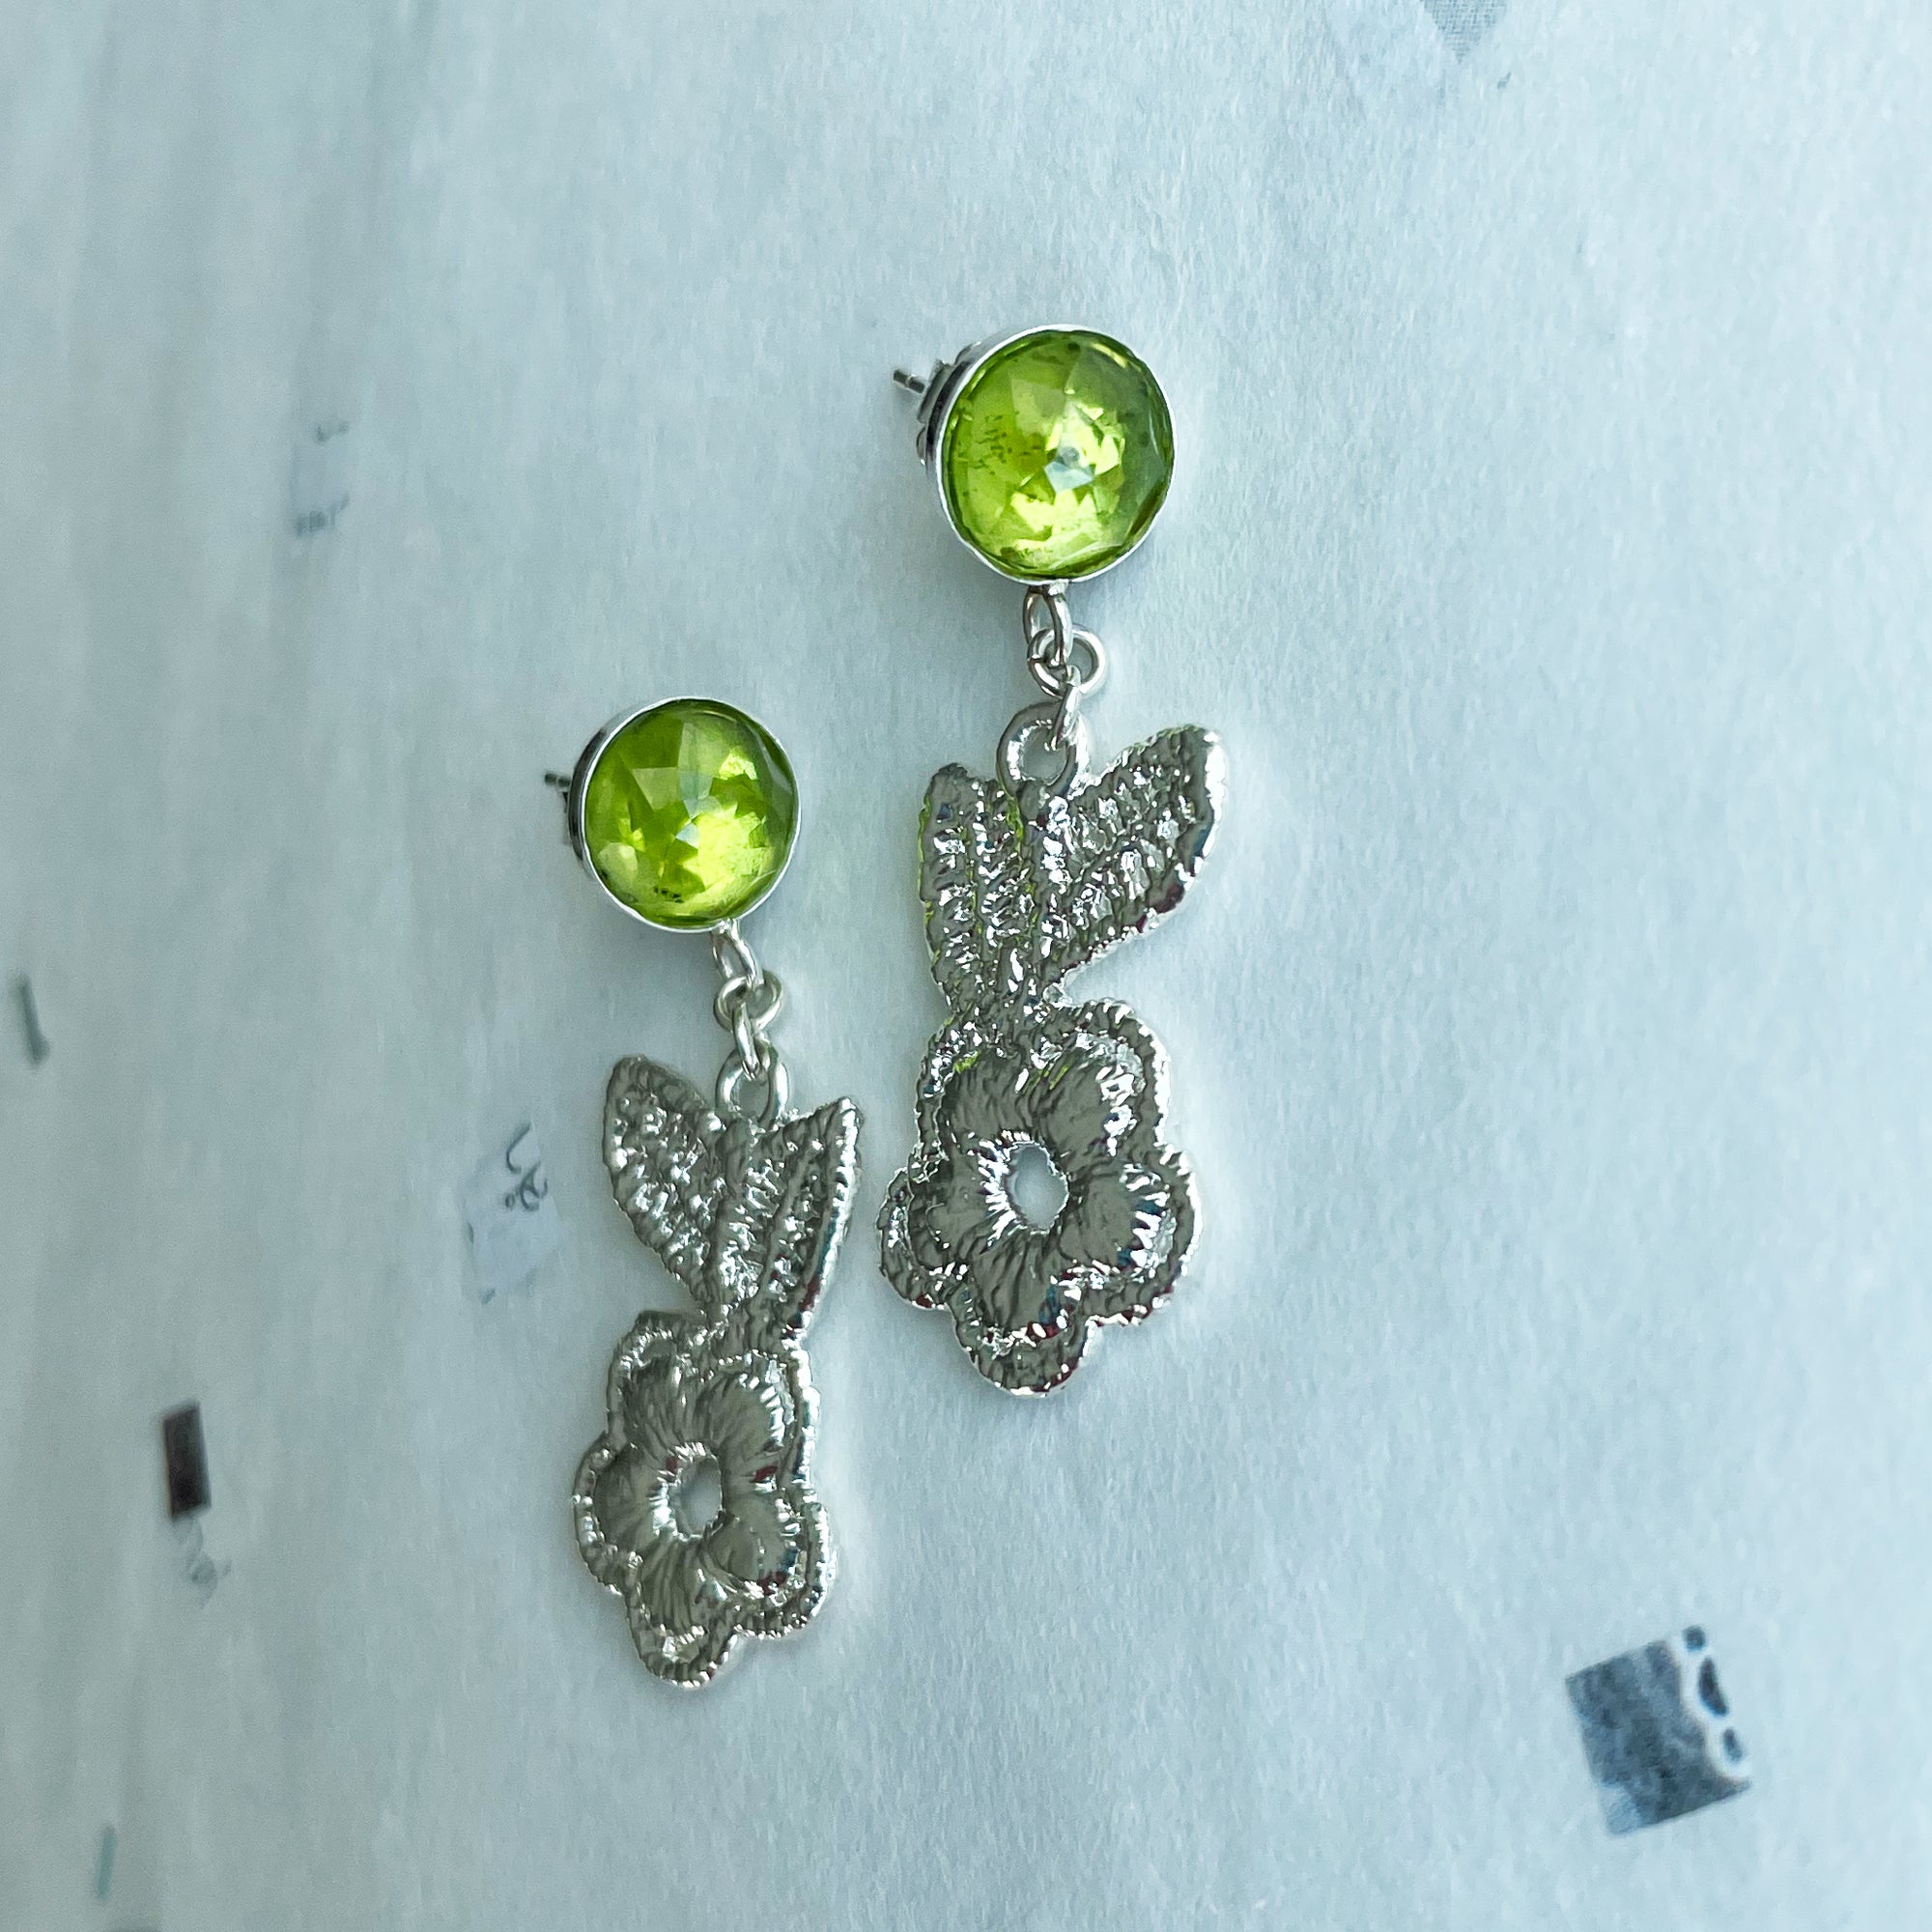 Peridot earrings with lace flowers in sterling silver.